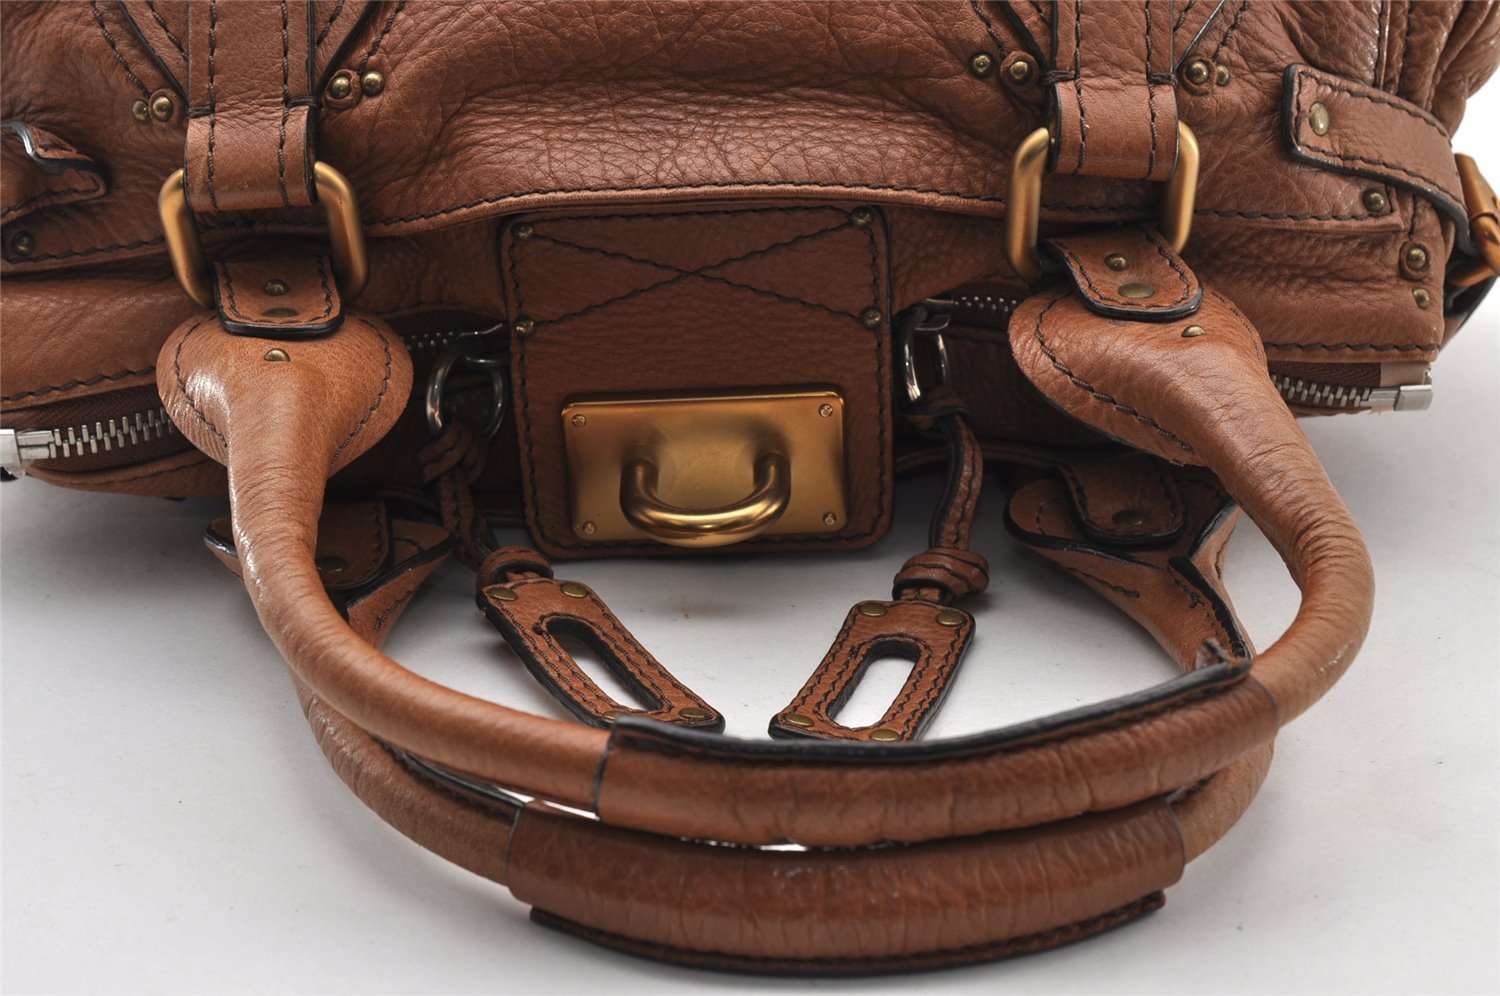 Authentic Chloe Paddington Vintage Leather Shoulder Hand Bag Purse Brown 4702I